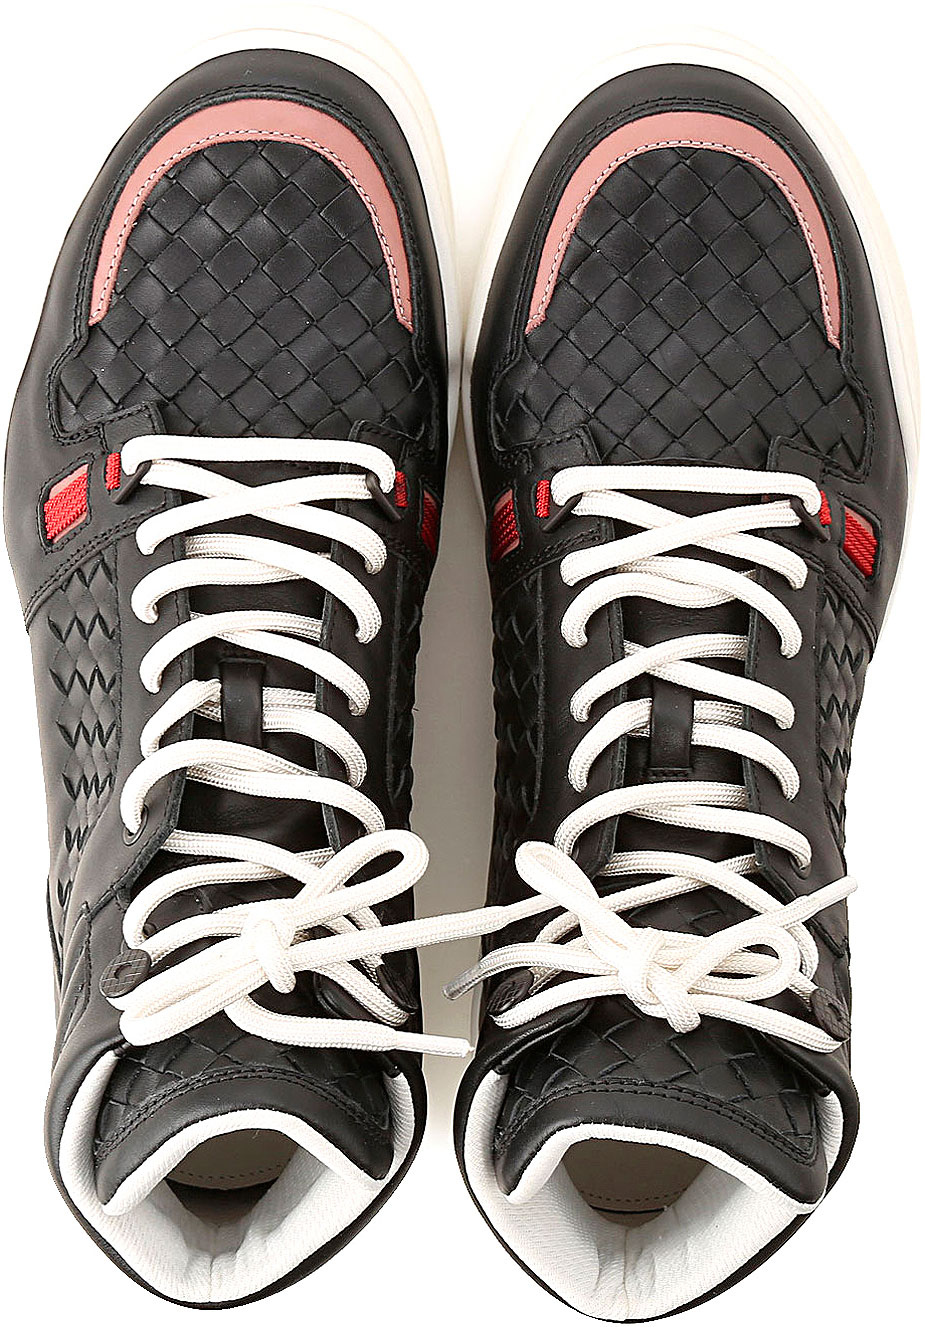 Mens Shoes Bottega Style code 496905vt04g1018